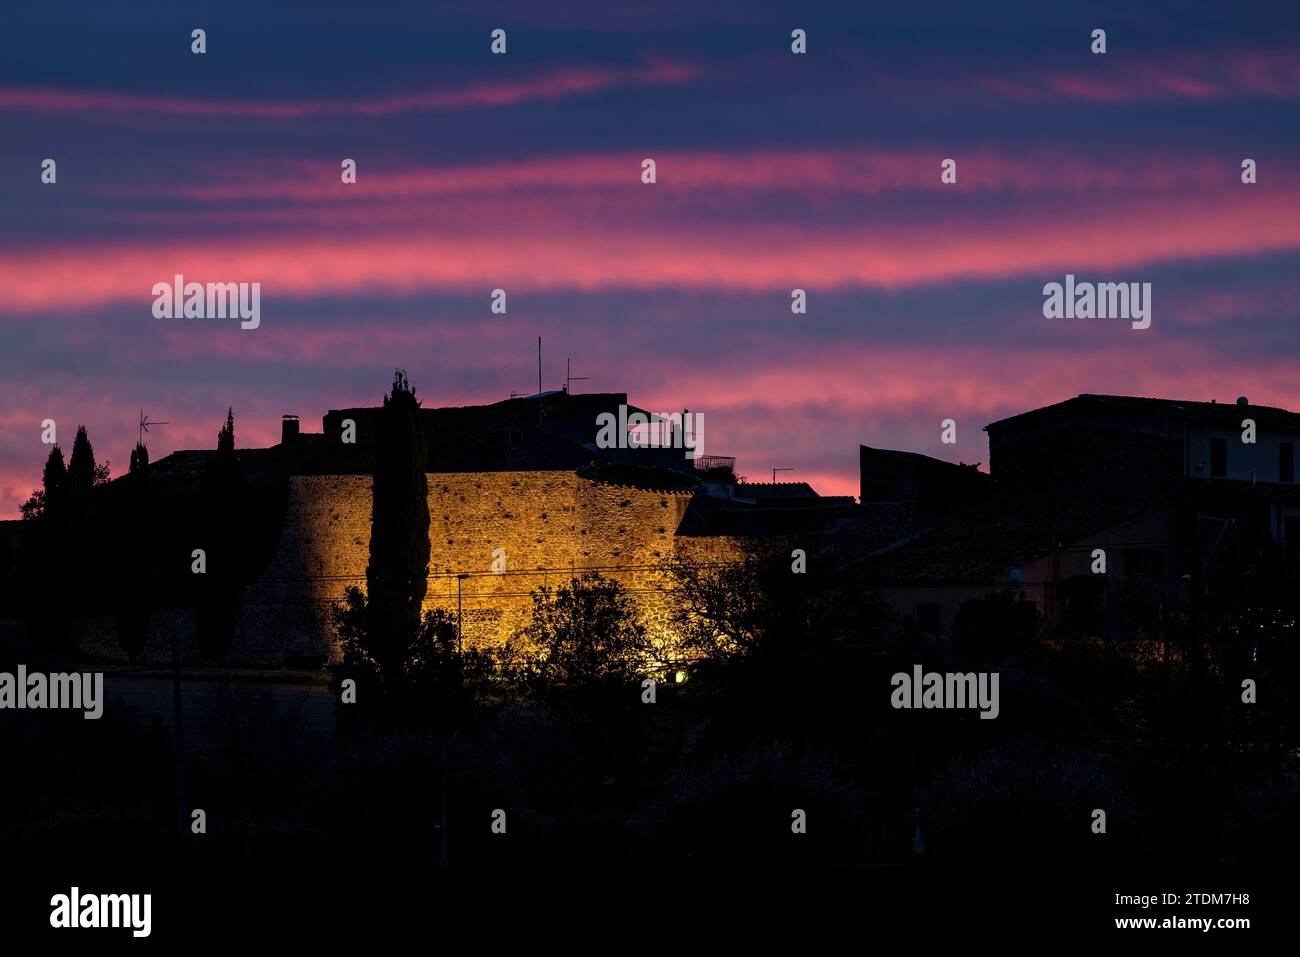 Marzà Castle illuminated at dawn with reddish sky (Alt Empordà, Gerona, Catalonia, Spain) ESP: Castillo de Marzà iluminado en un amanecer (Gerona) Stock Photo